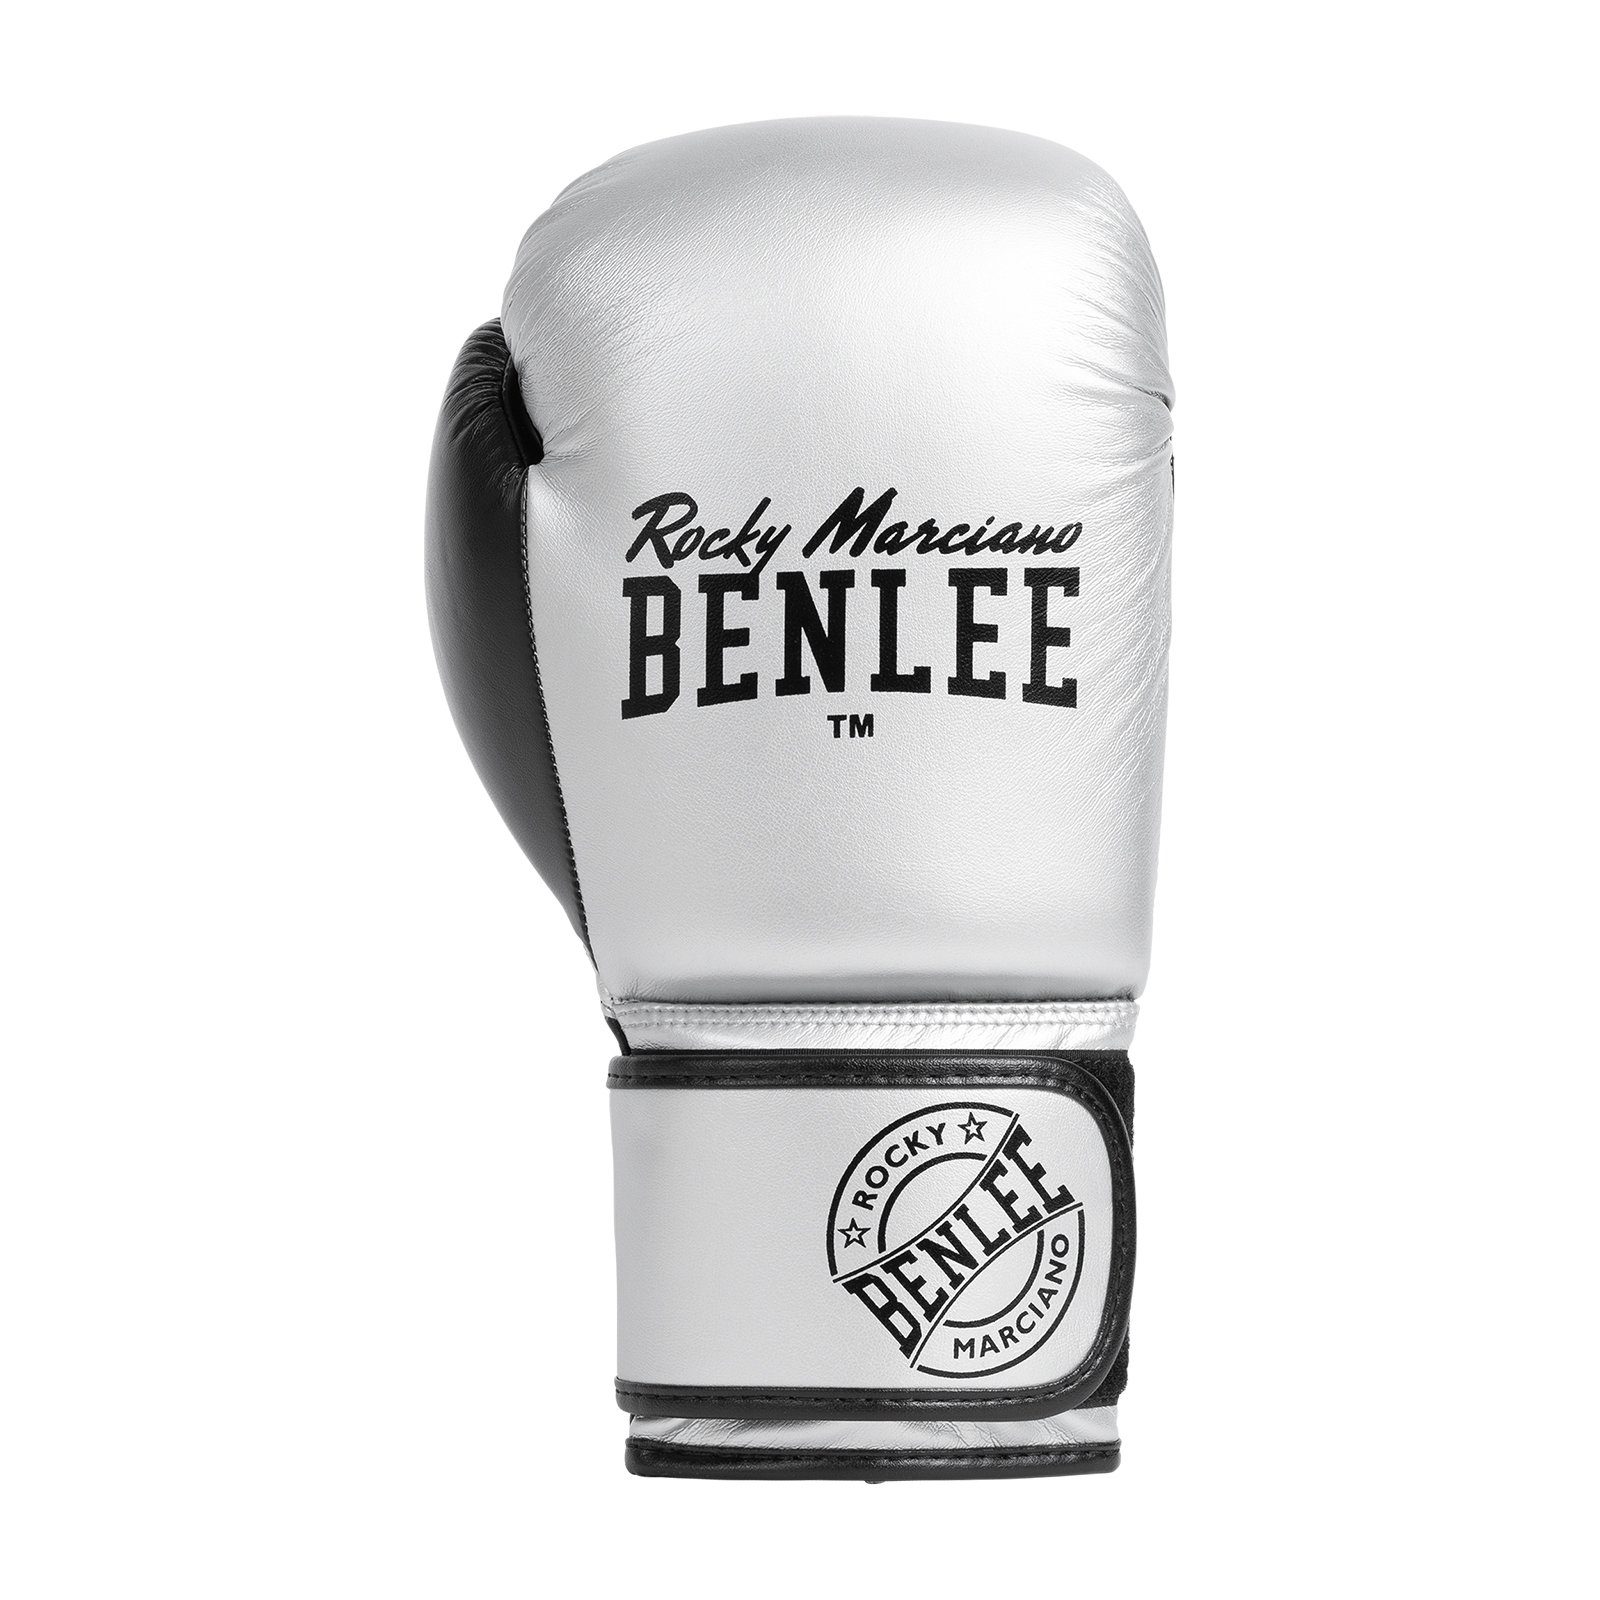 Benlee Traditionelle Boxhandschuhe Rocky BENLEE von CARLOS, Marciano Boxhandschuhe